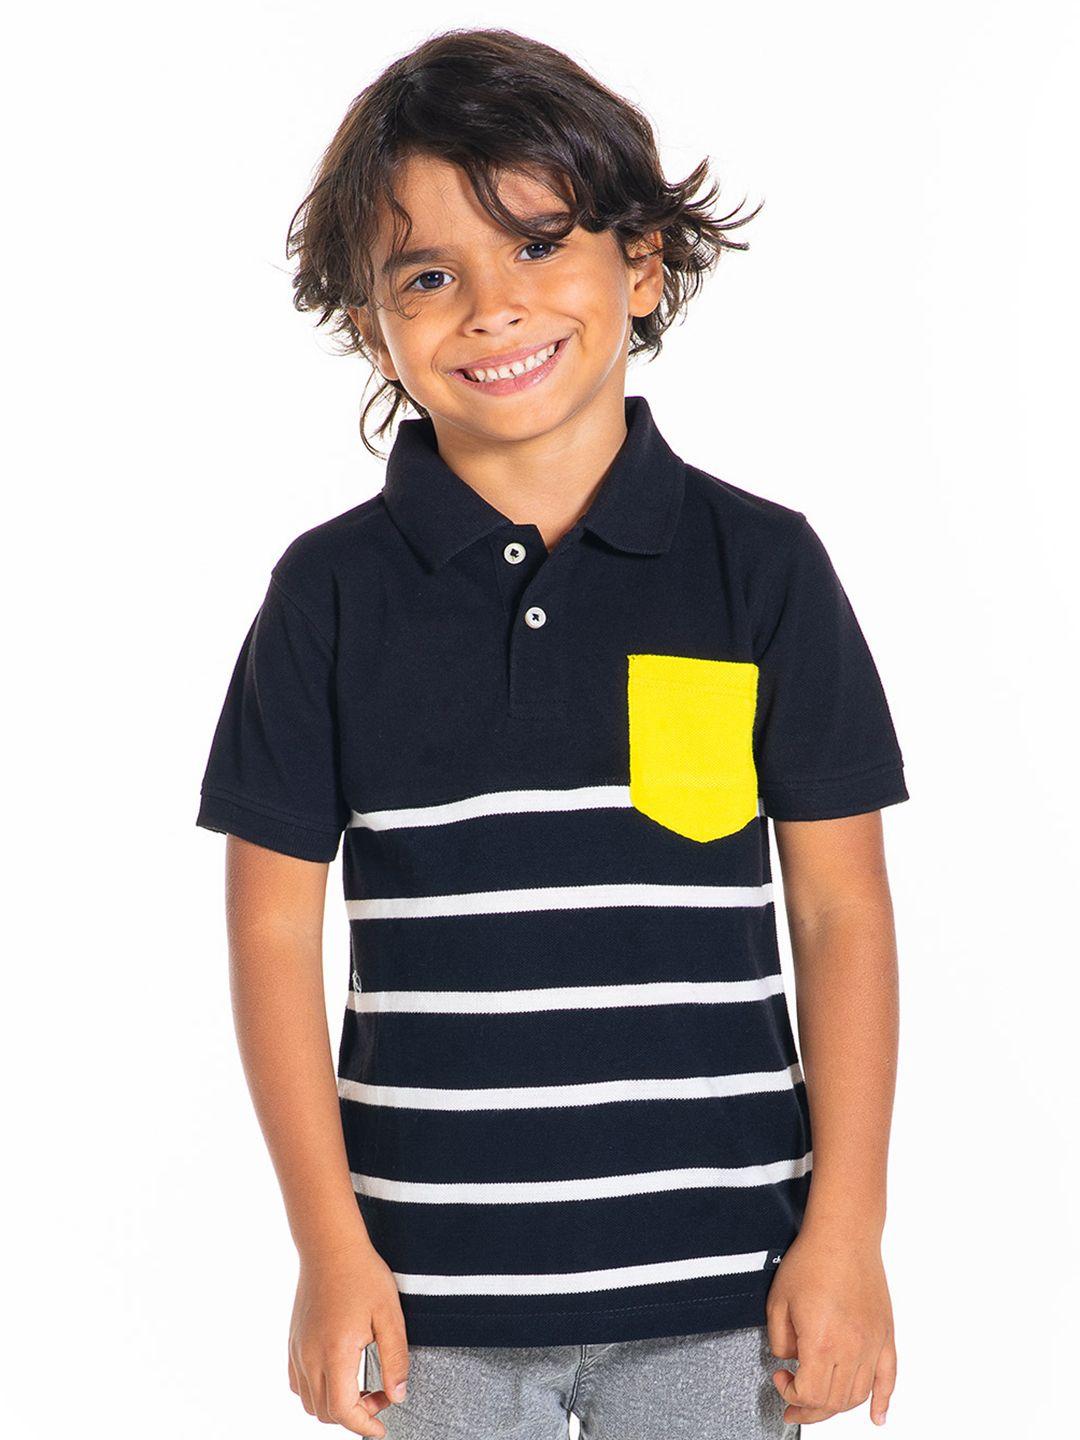 cherry-crumble-boys-black-&-white-striped-polo-collar-t-shirt